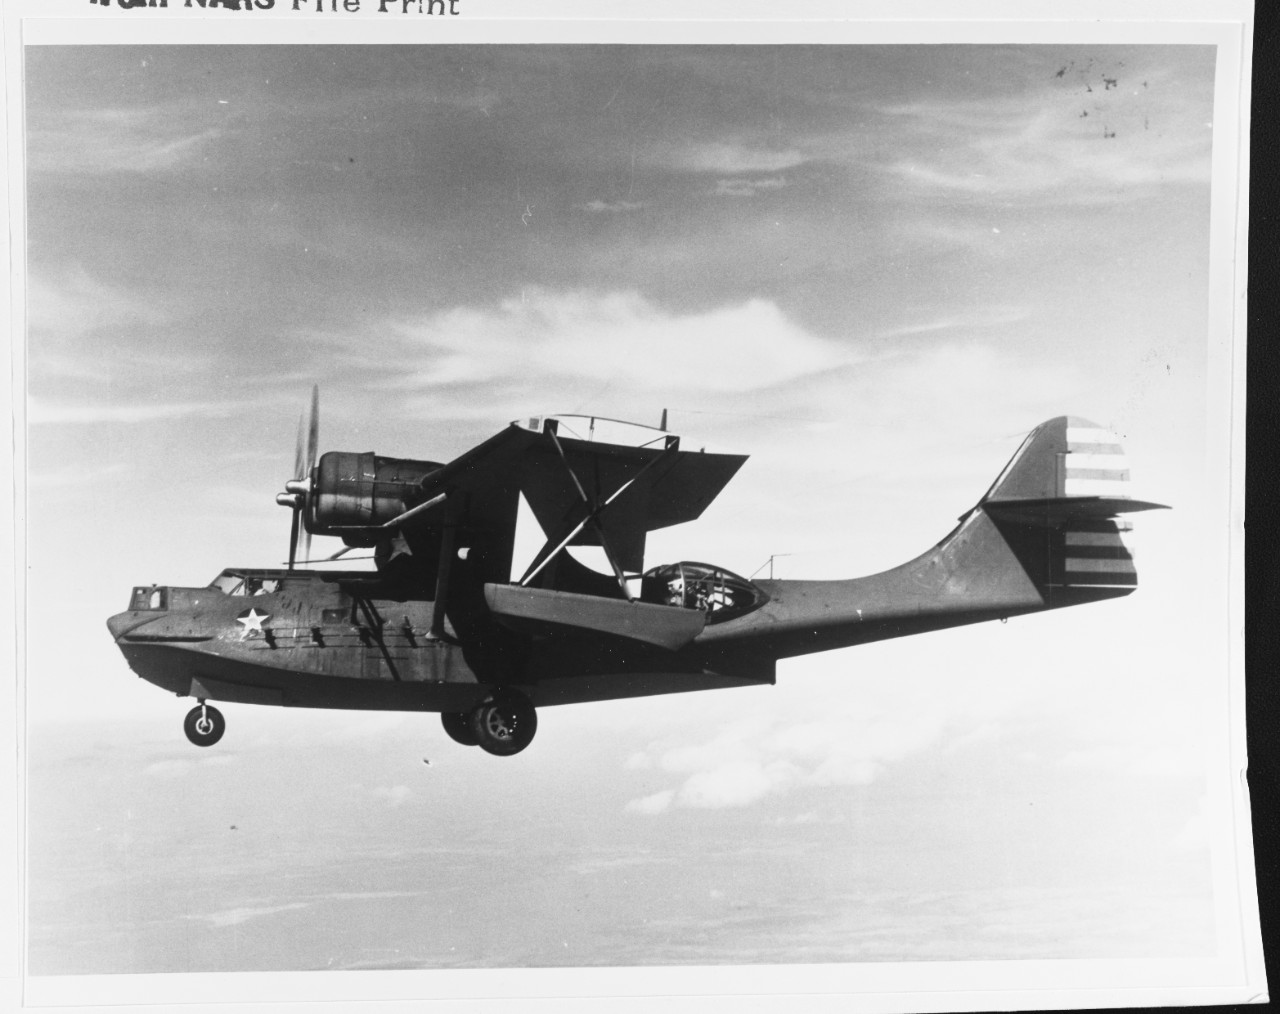 Consolidated PBY-5A "Catalina" patrol bomber (BU# 7248)